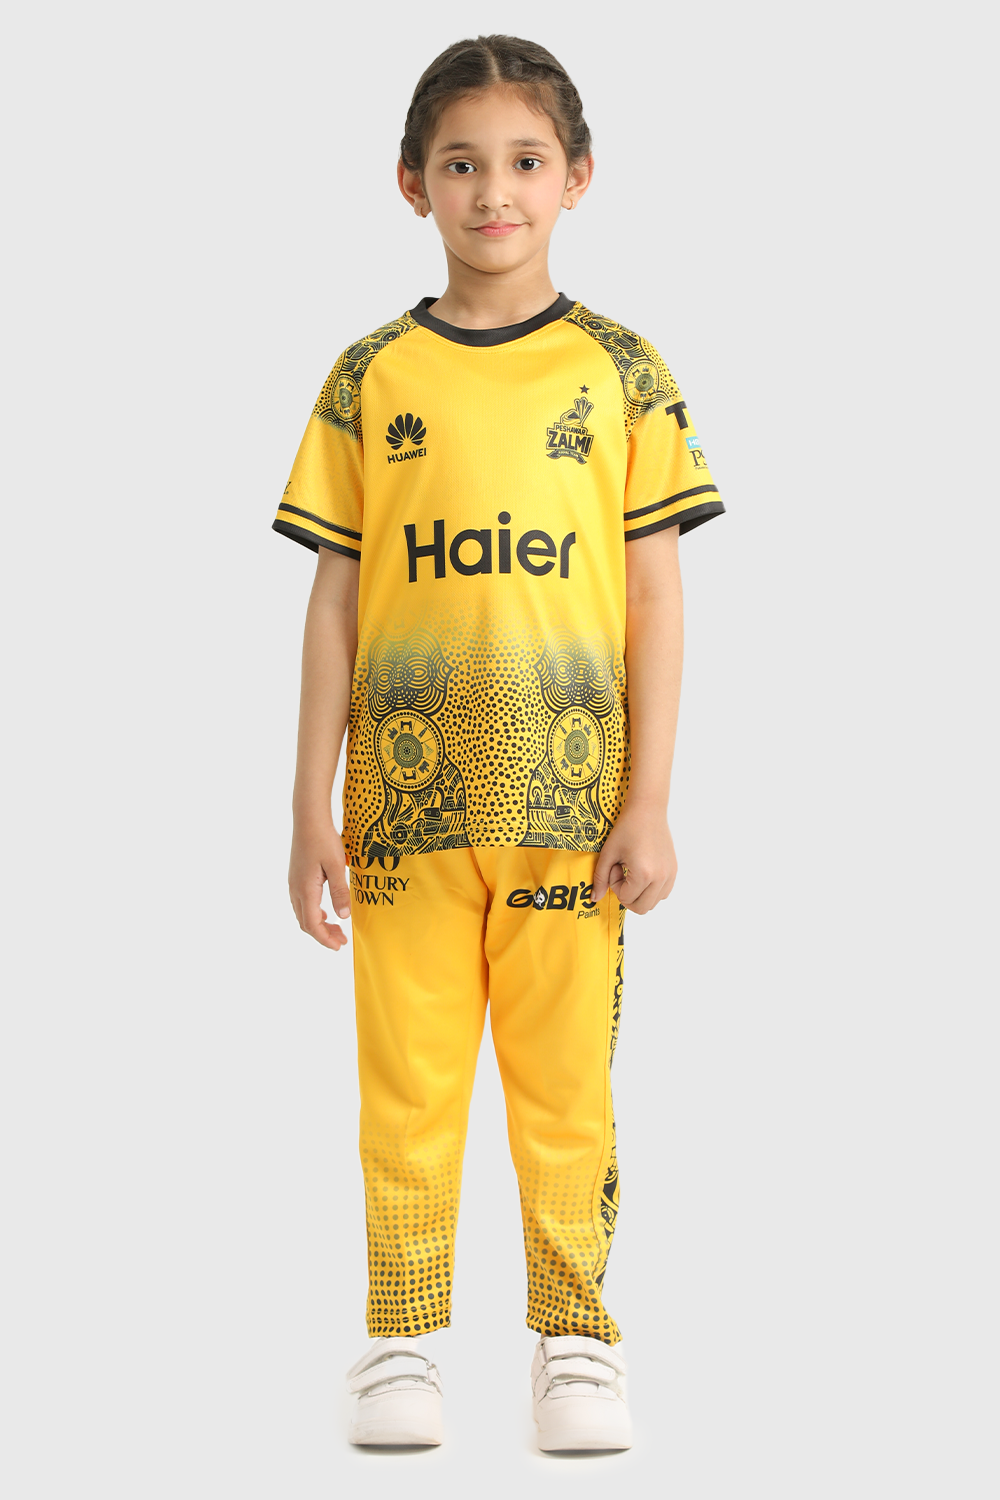 Peshawar Zalmi PSL 9 Juniors Customized Home Kit 